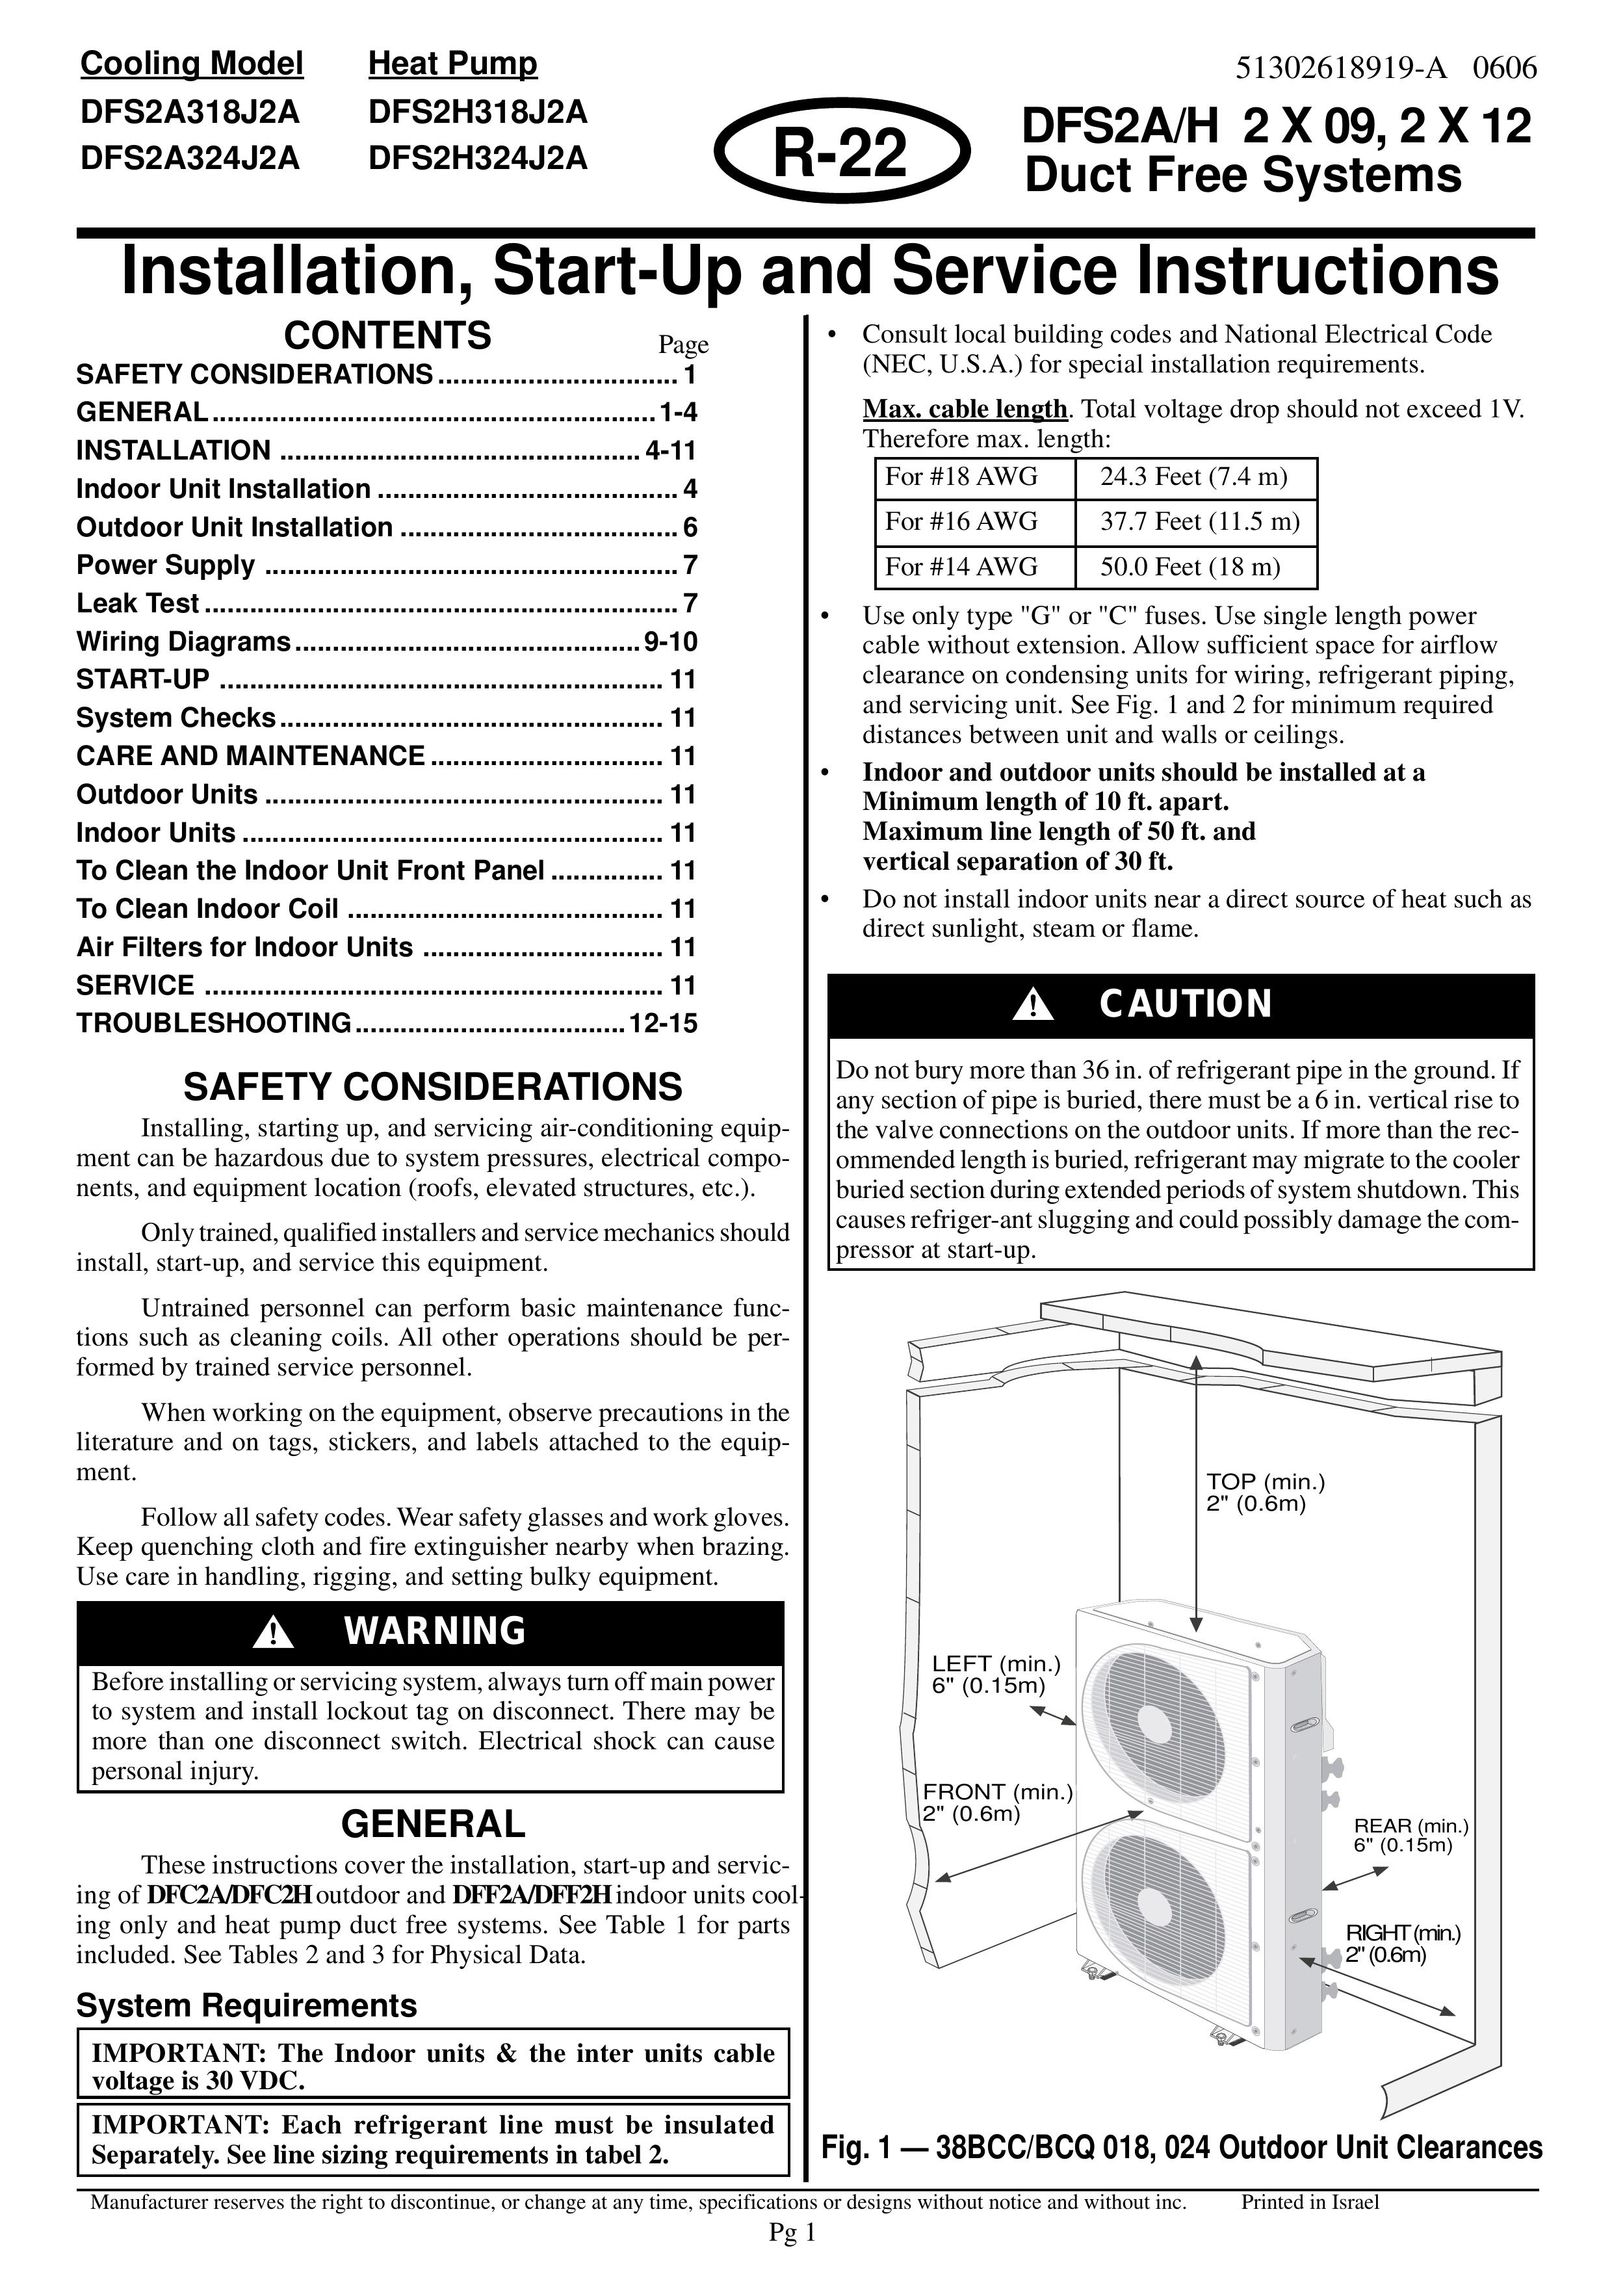 ICP DAS USA DFS2H318J2A Air Conditioner User Manual